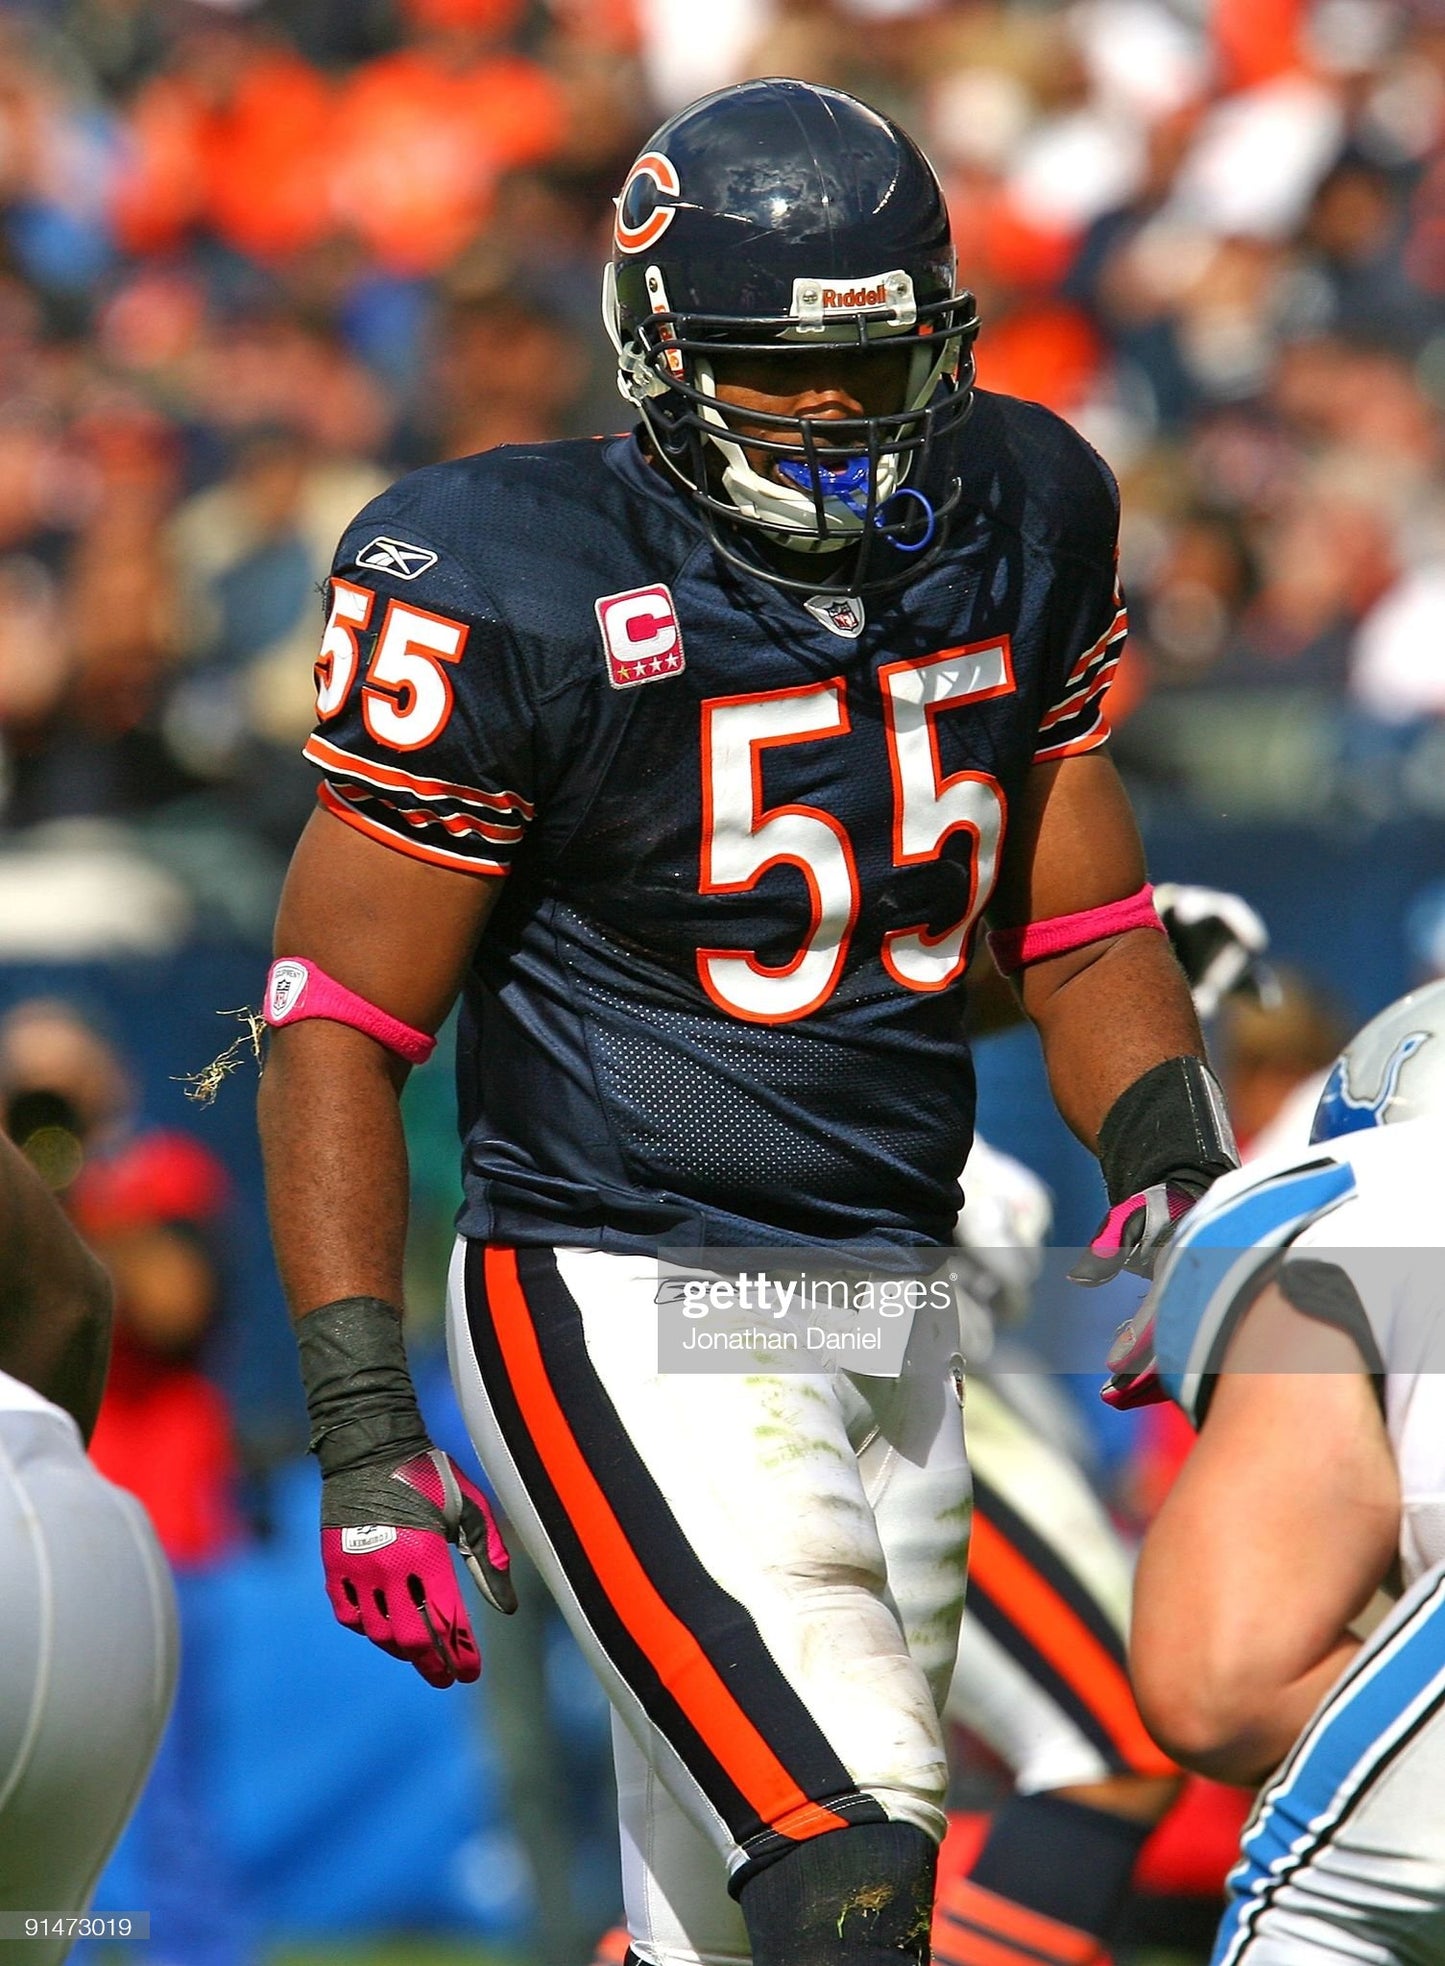 Chicago Bears 2009 Lance Briggs NFL Football Jersey (54/XXL)